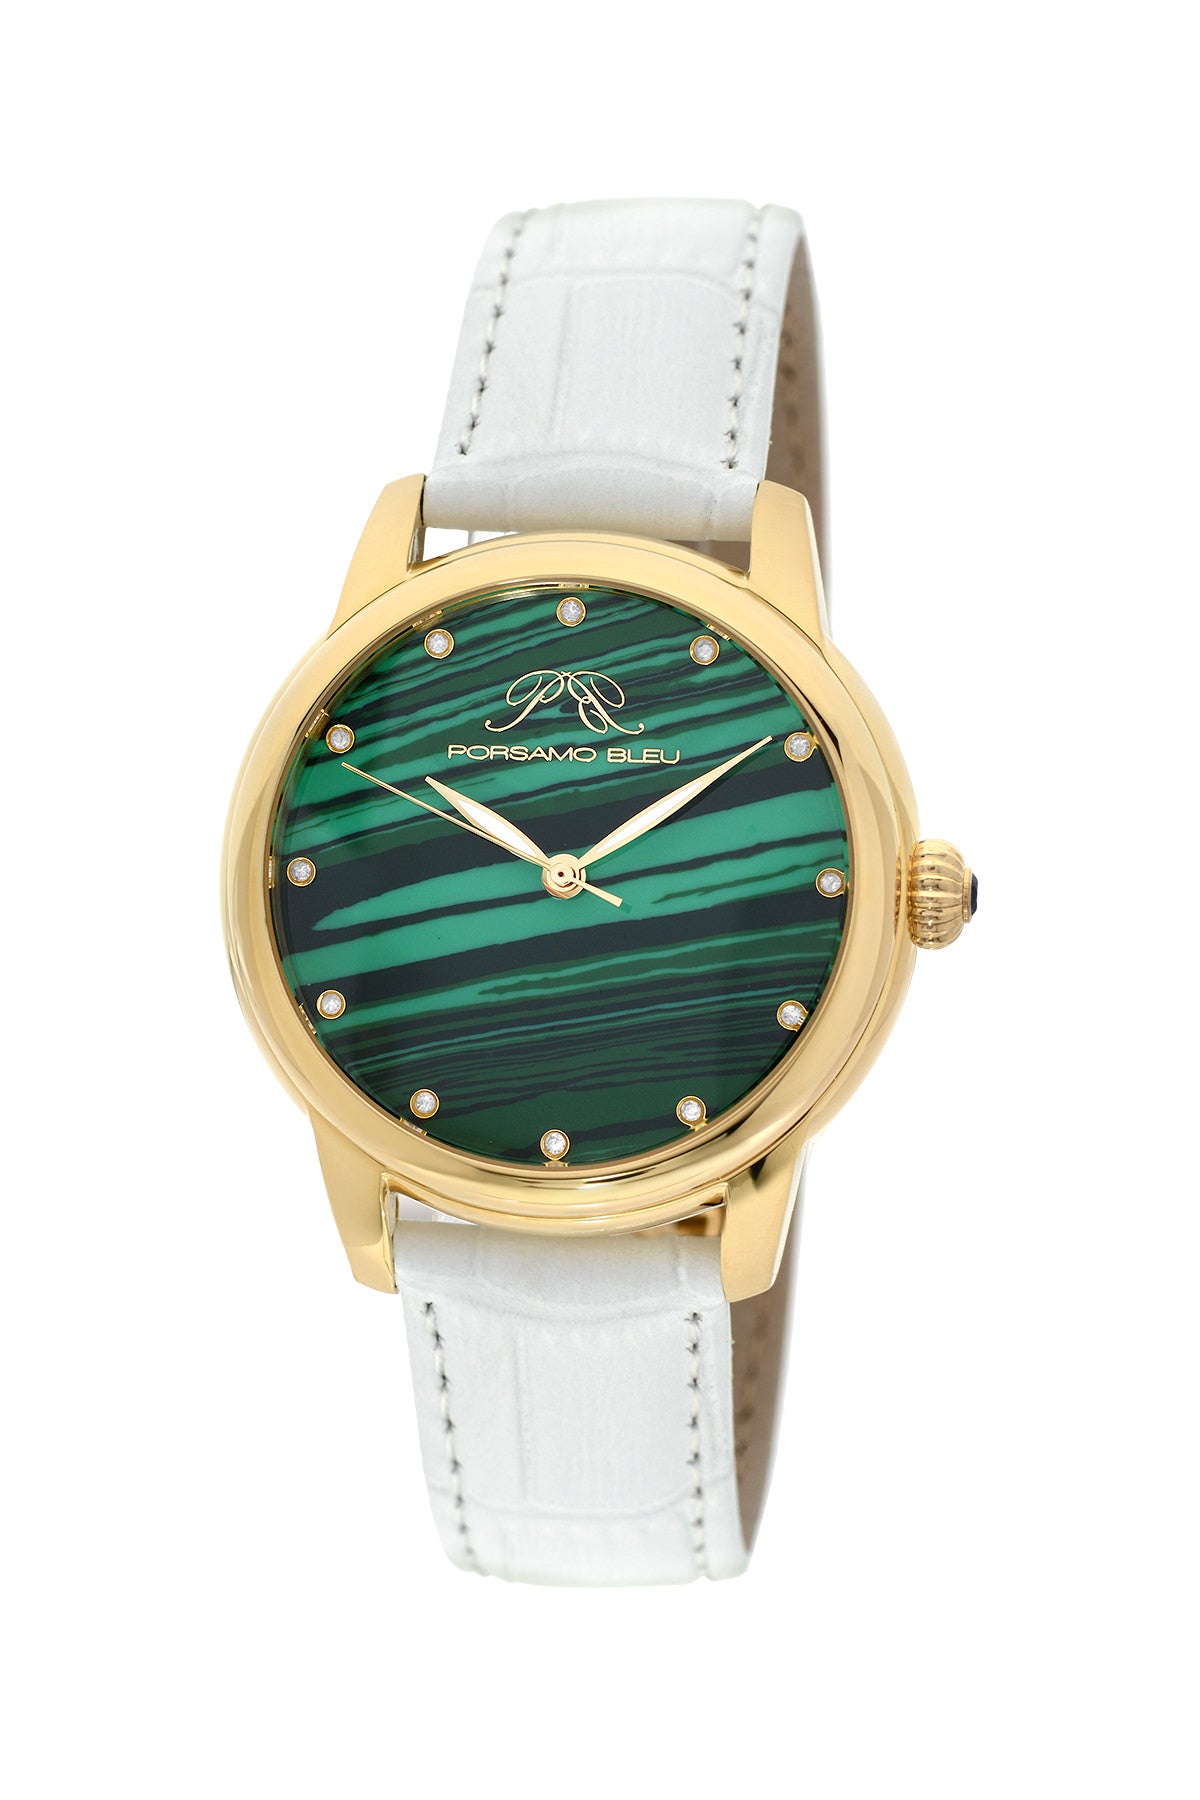 Porsamo Bleu Gemma luxury diamond women's watch, genuine leather band, gold, white, malachite 732CGEL